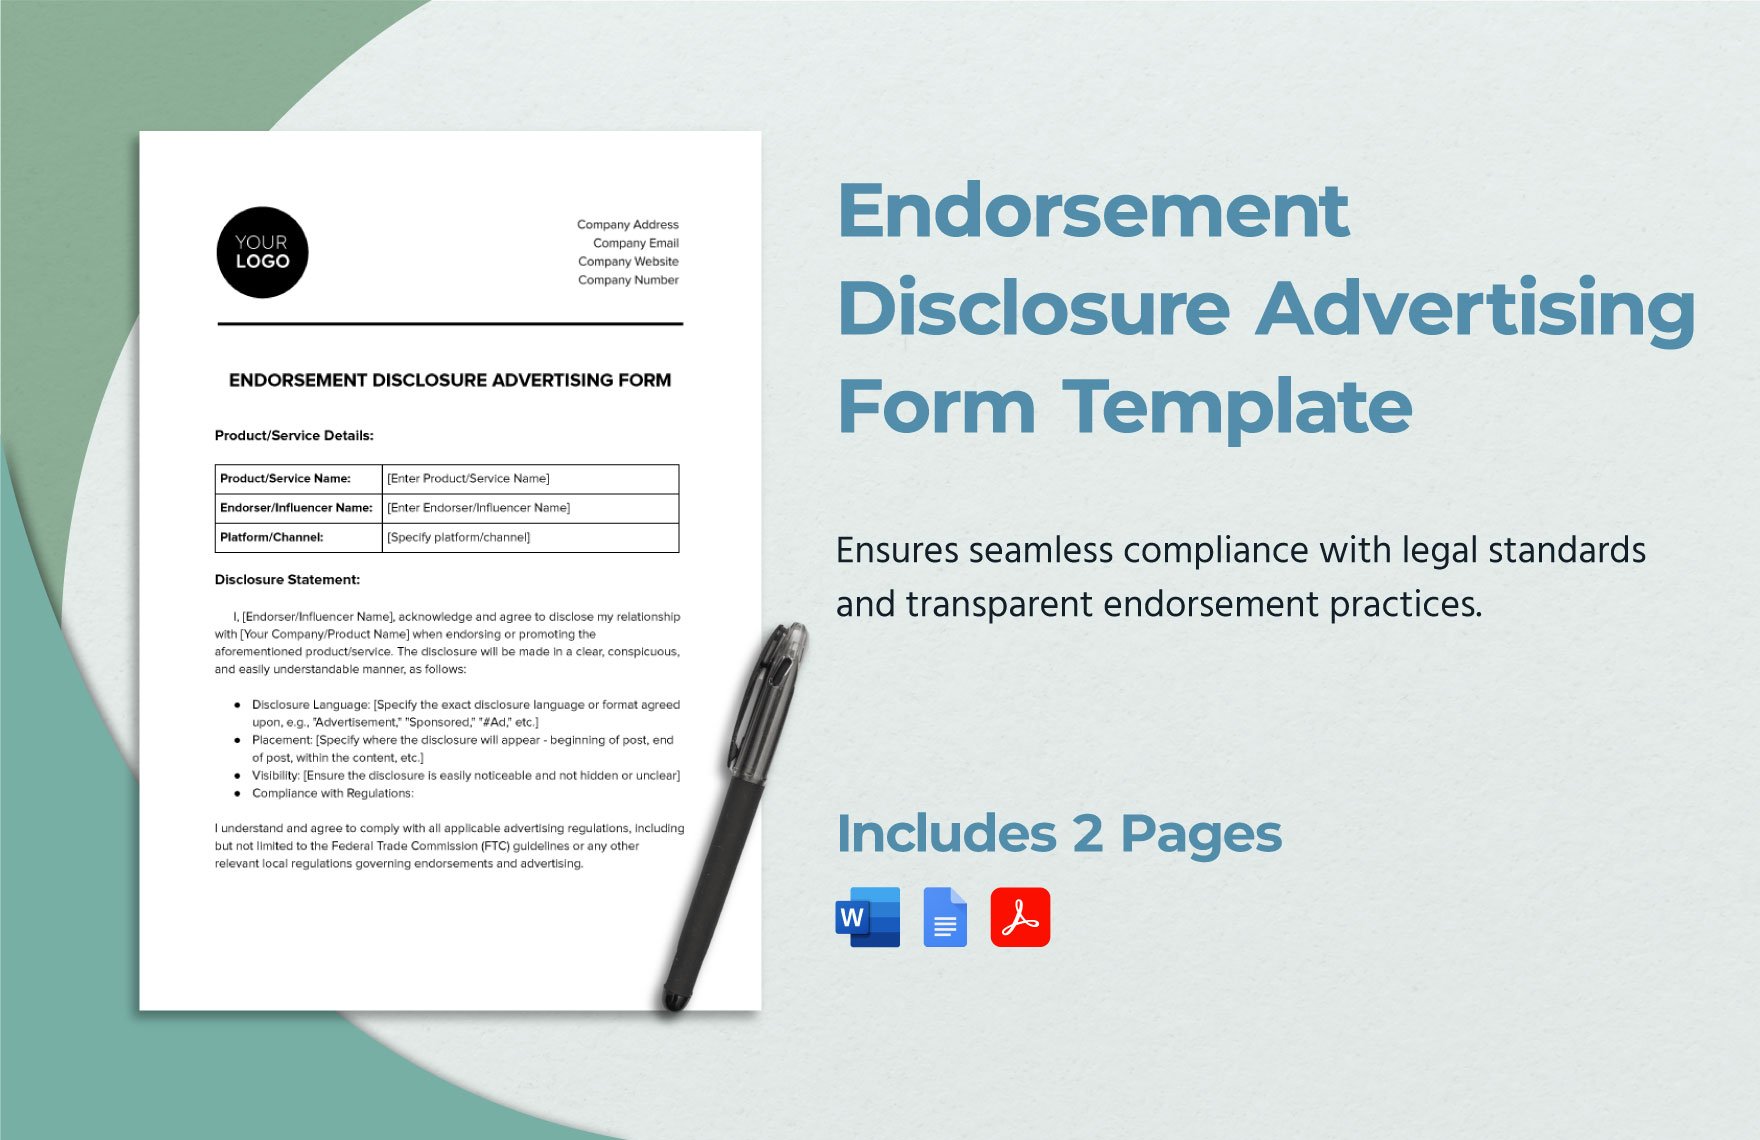 Endorsement Disclosure Advertising Form Template in Word, Google Docs, PDF